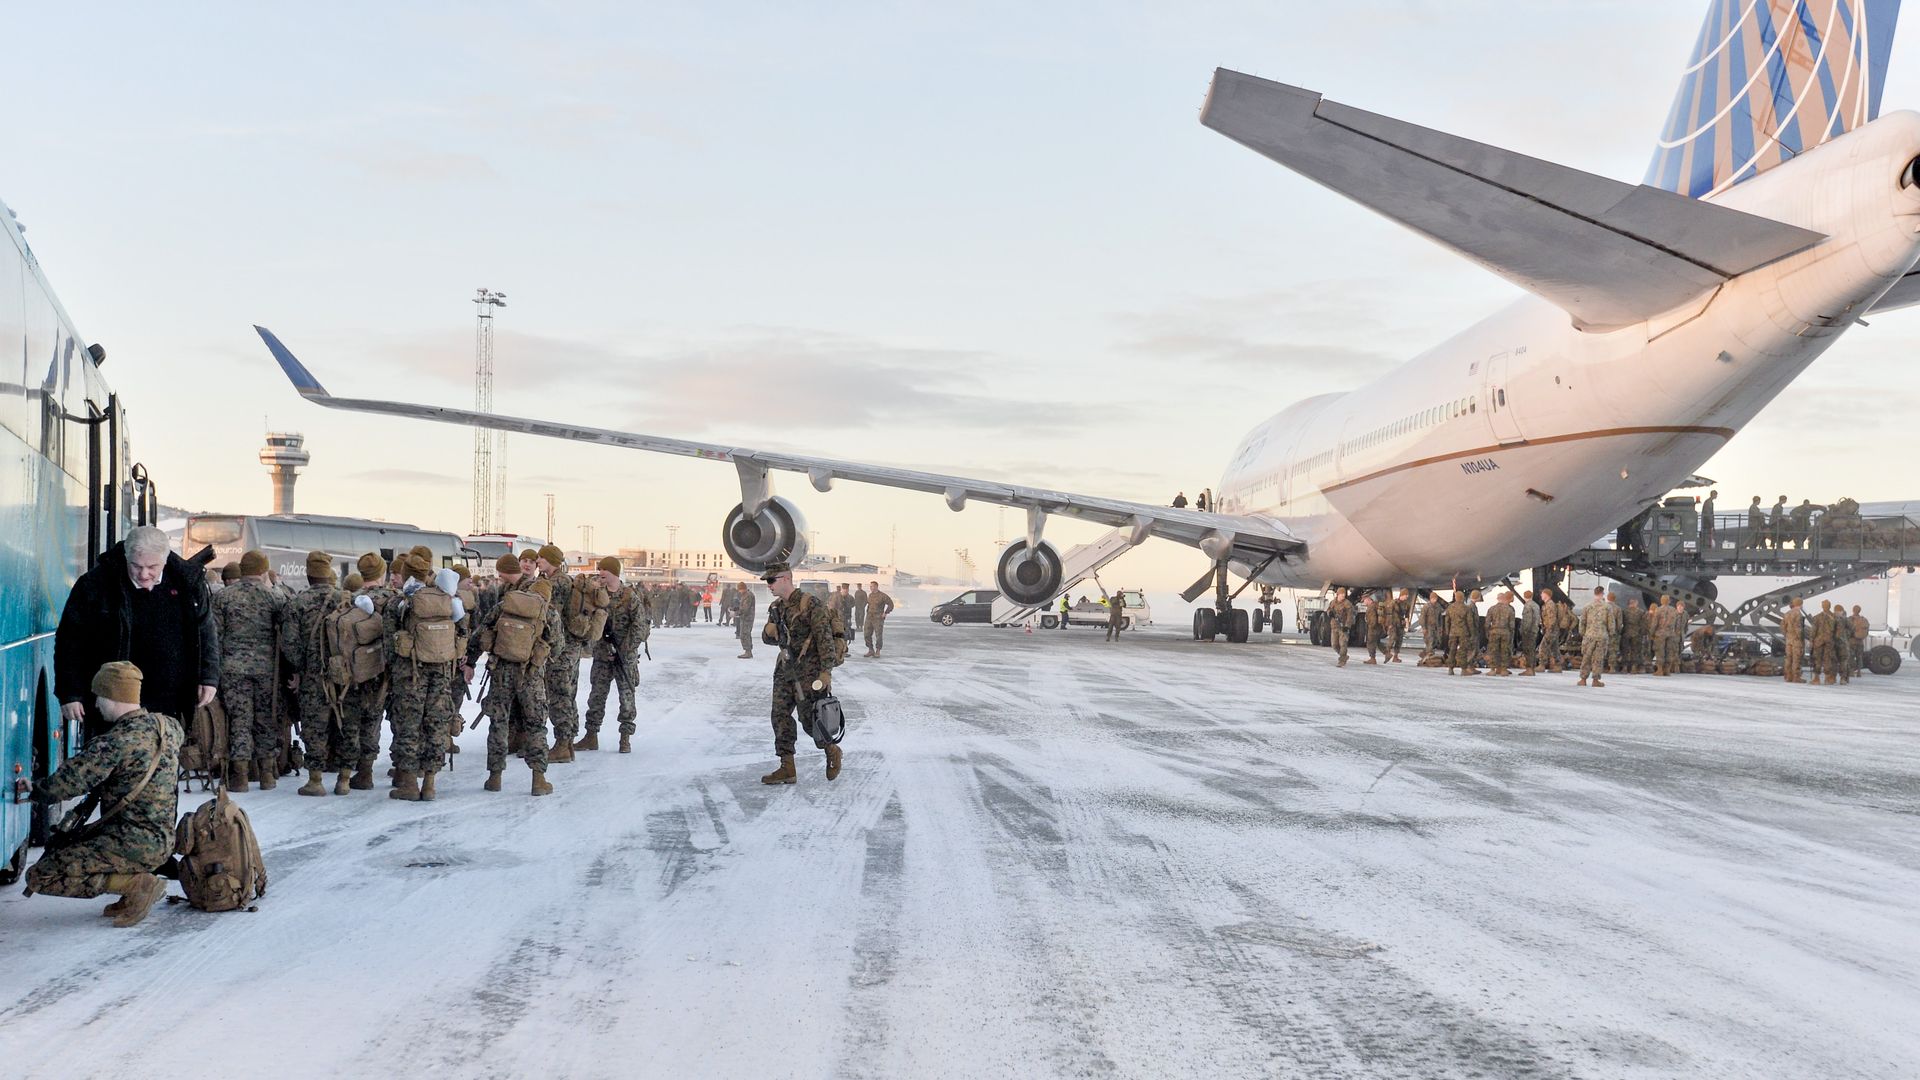 U.S. Marines disembark fro a plane onto a snowy tarmac.